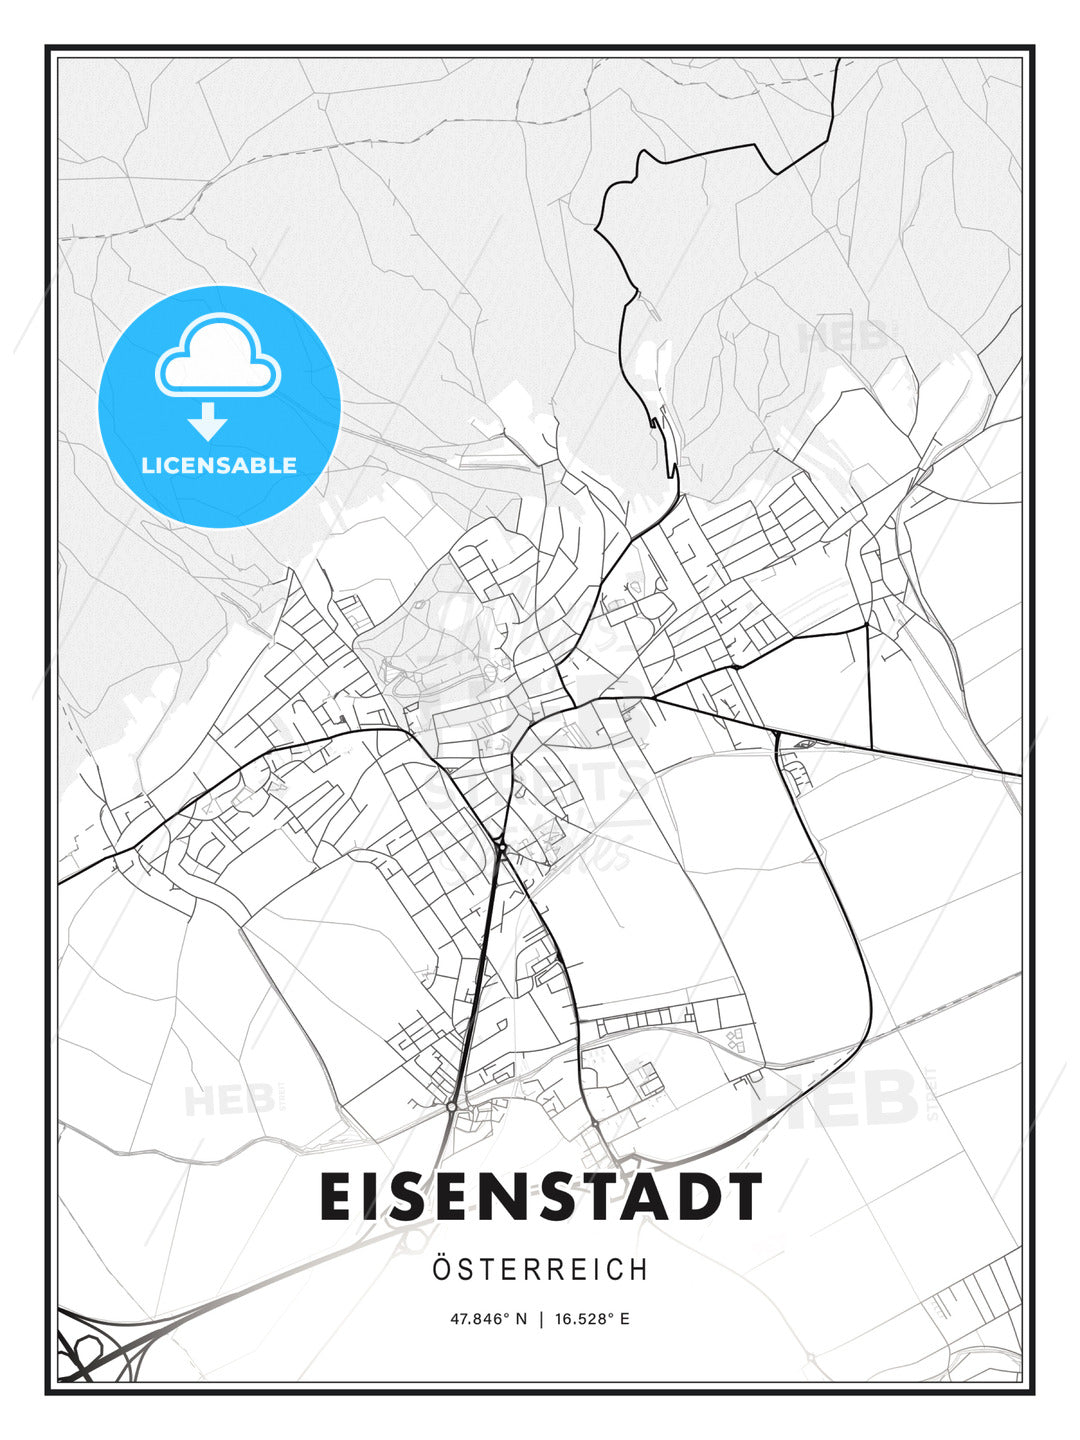 Eisenstadt, Austria, Modern Print Template in Various Formats - HEBSTREITS Sketches